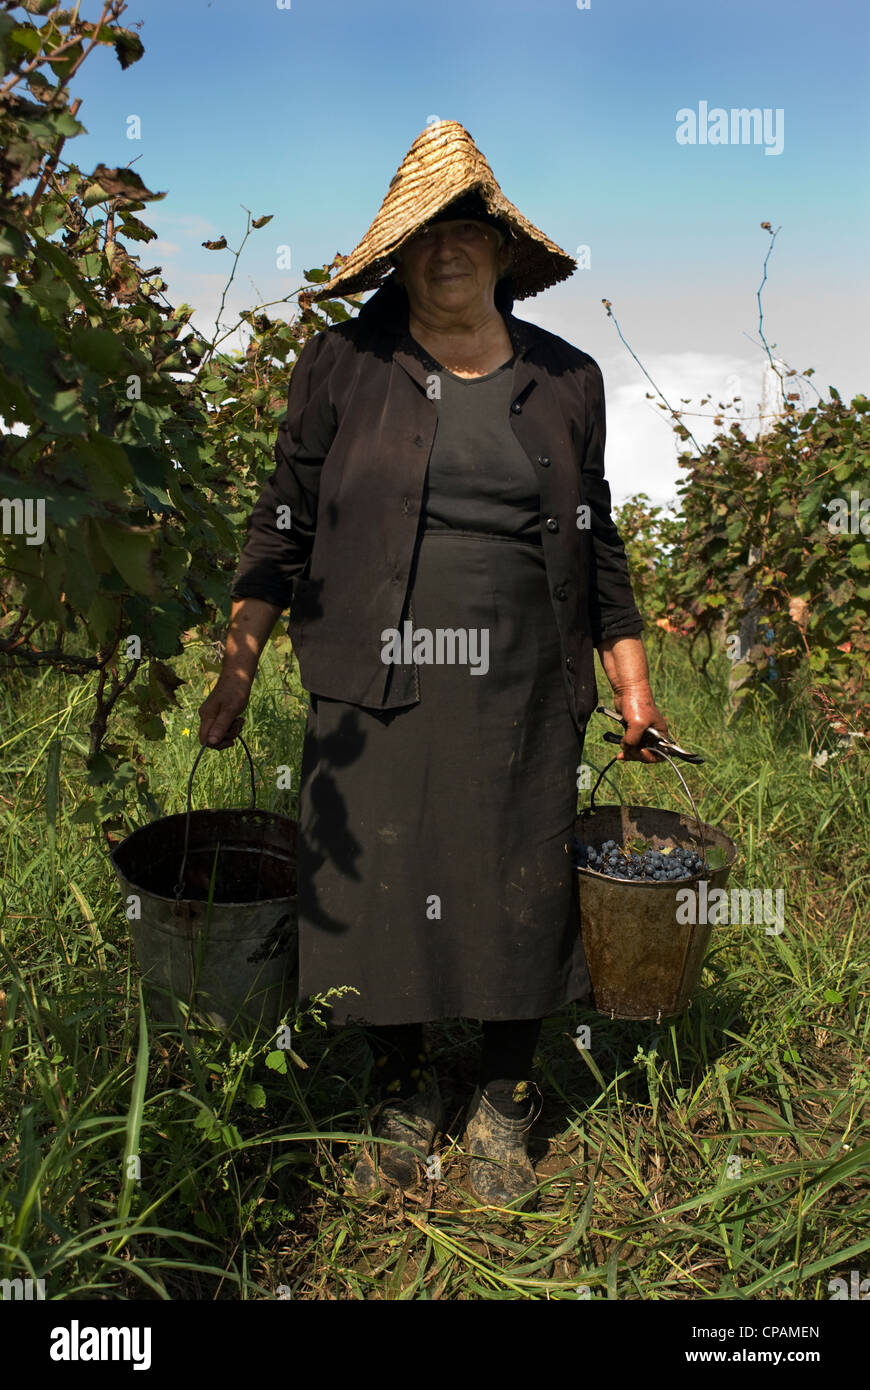 Woman grape picker, Georgia, former Soviet republic Stock Photo